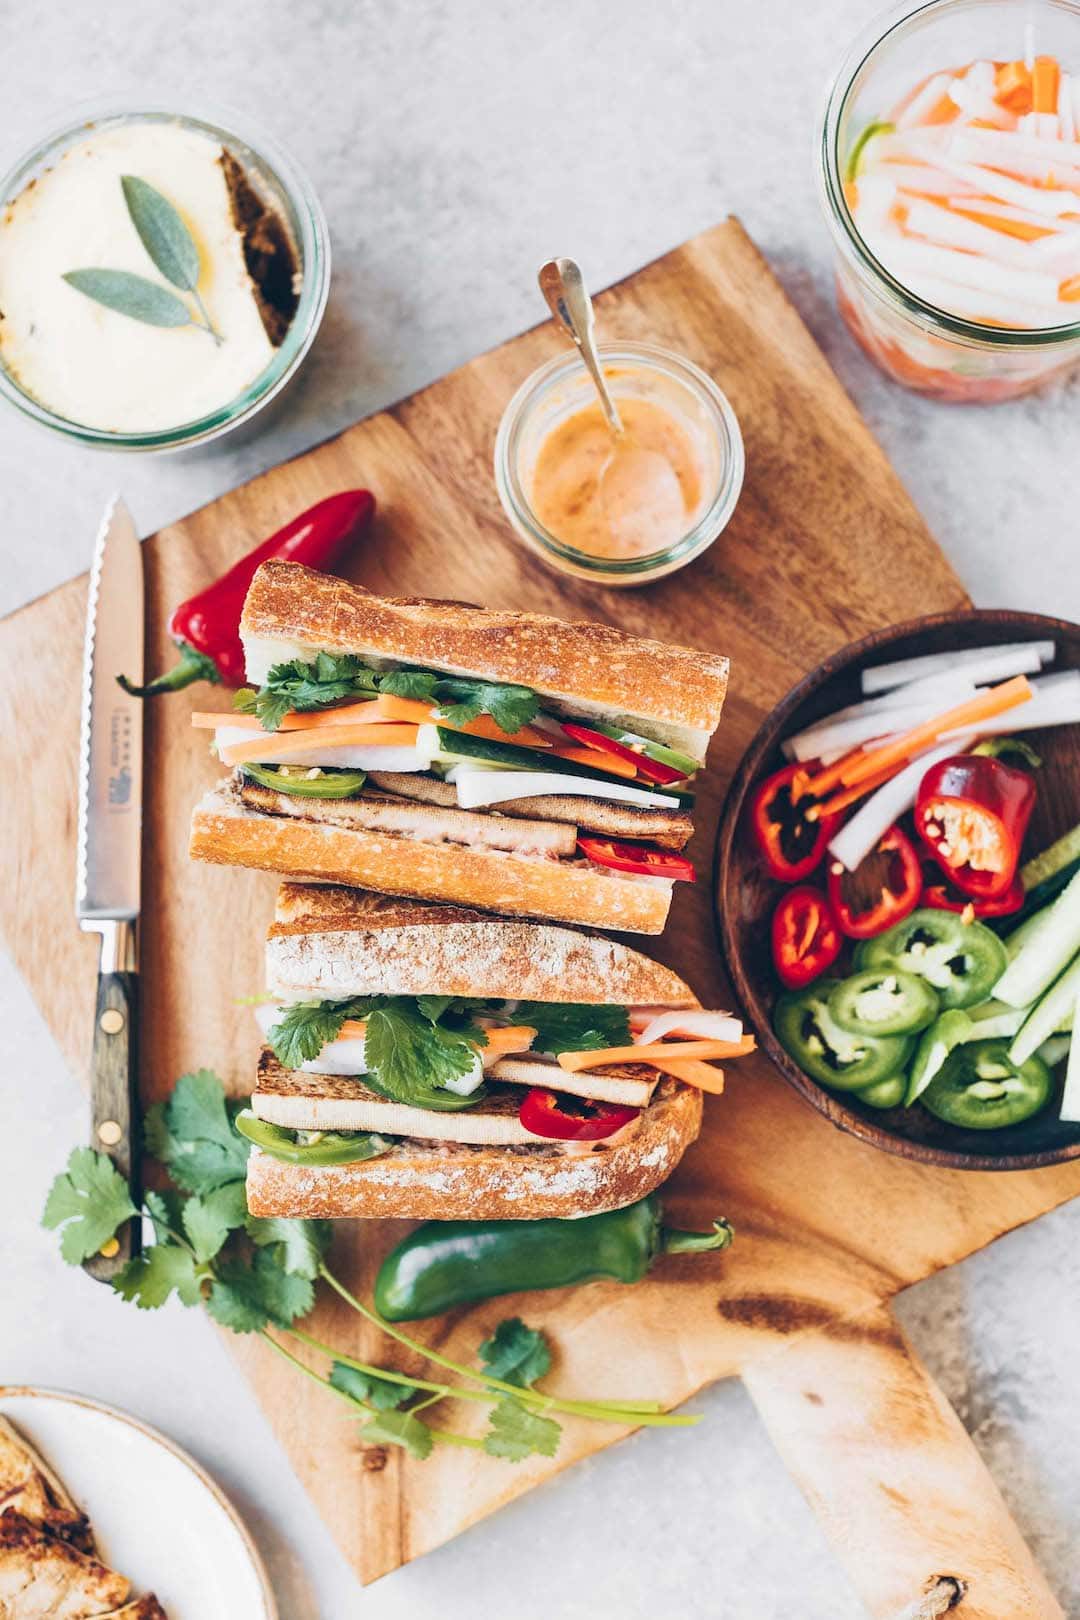 11 Yummy Plant Based Sandwiches - Vegan Banh Mi Sandwich